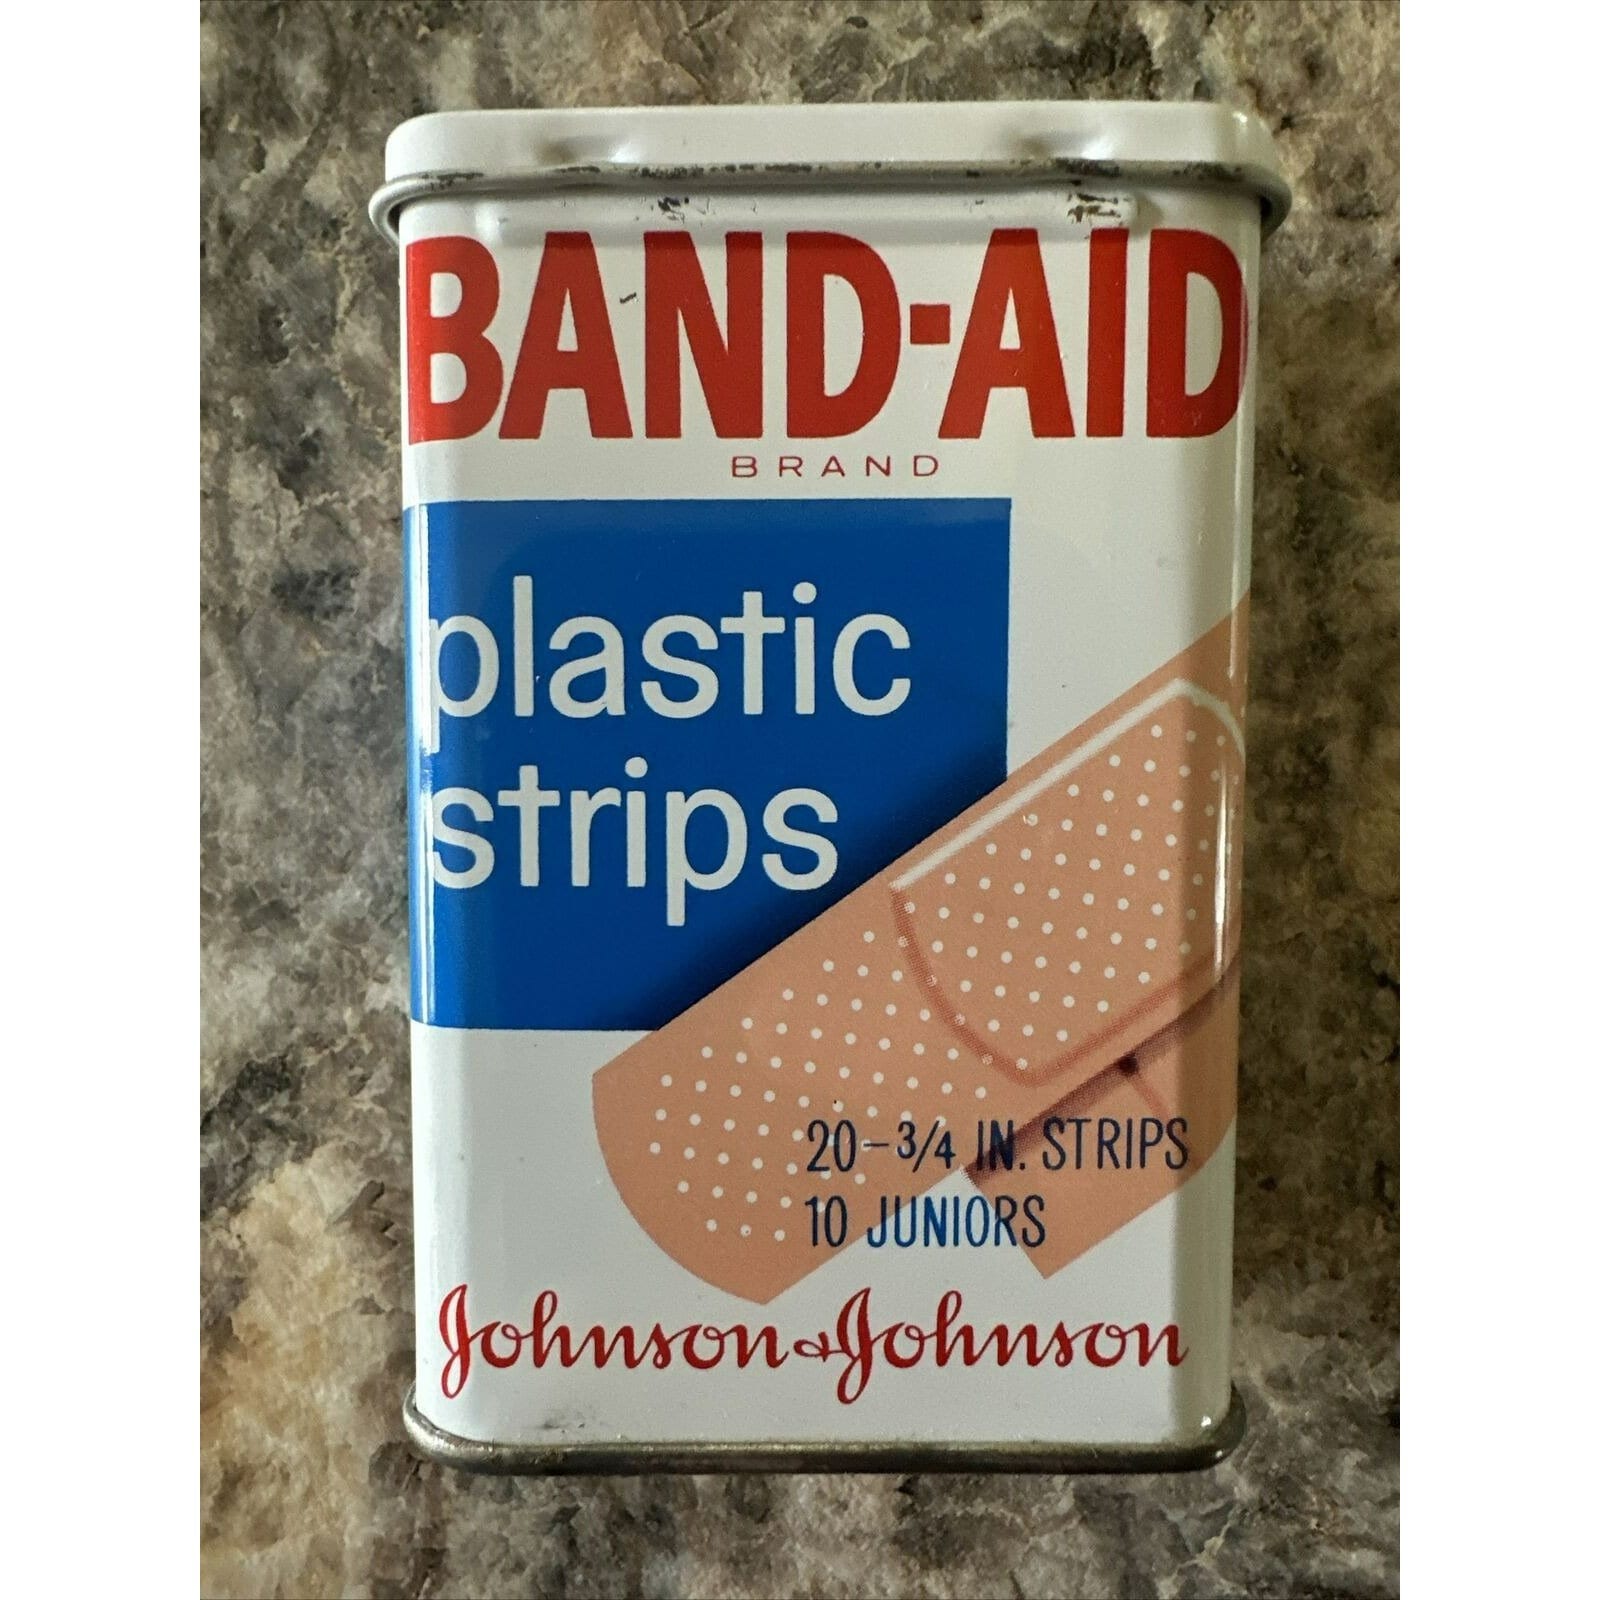 Bandaid Storage With Lid Ointment Storage Bandaids Box Band-aid